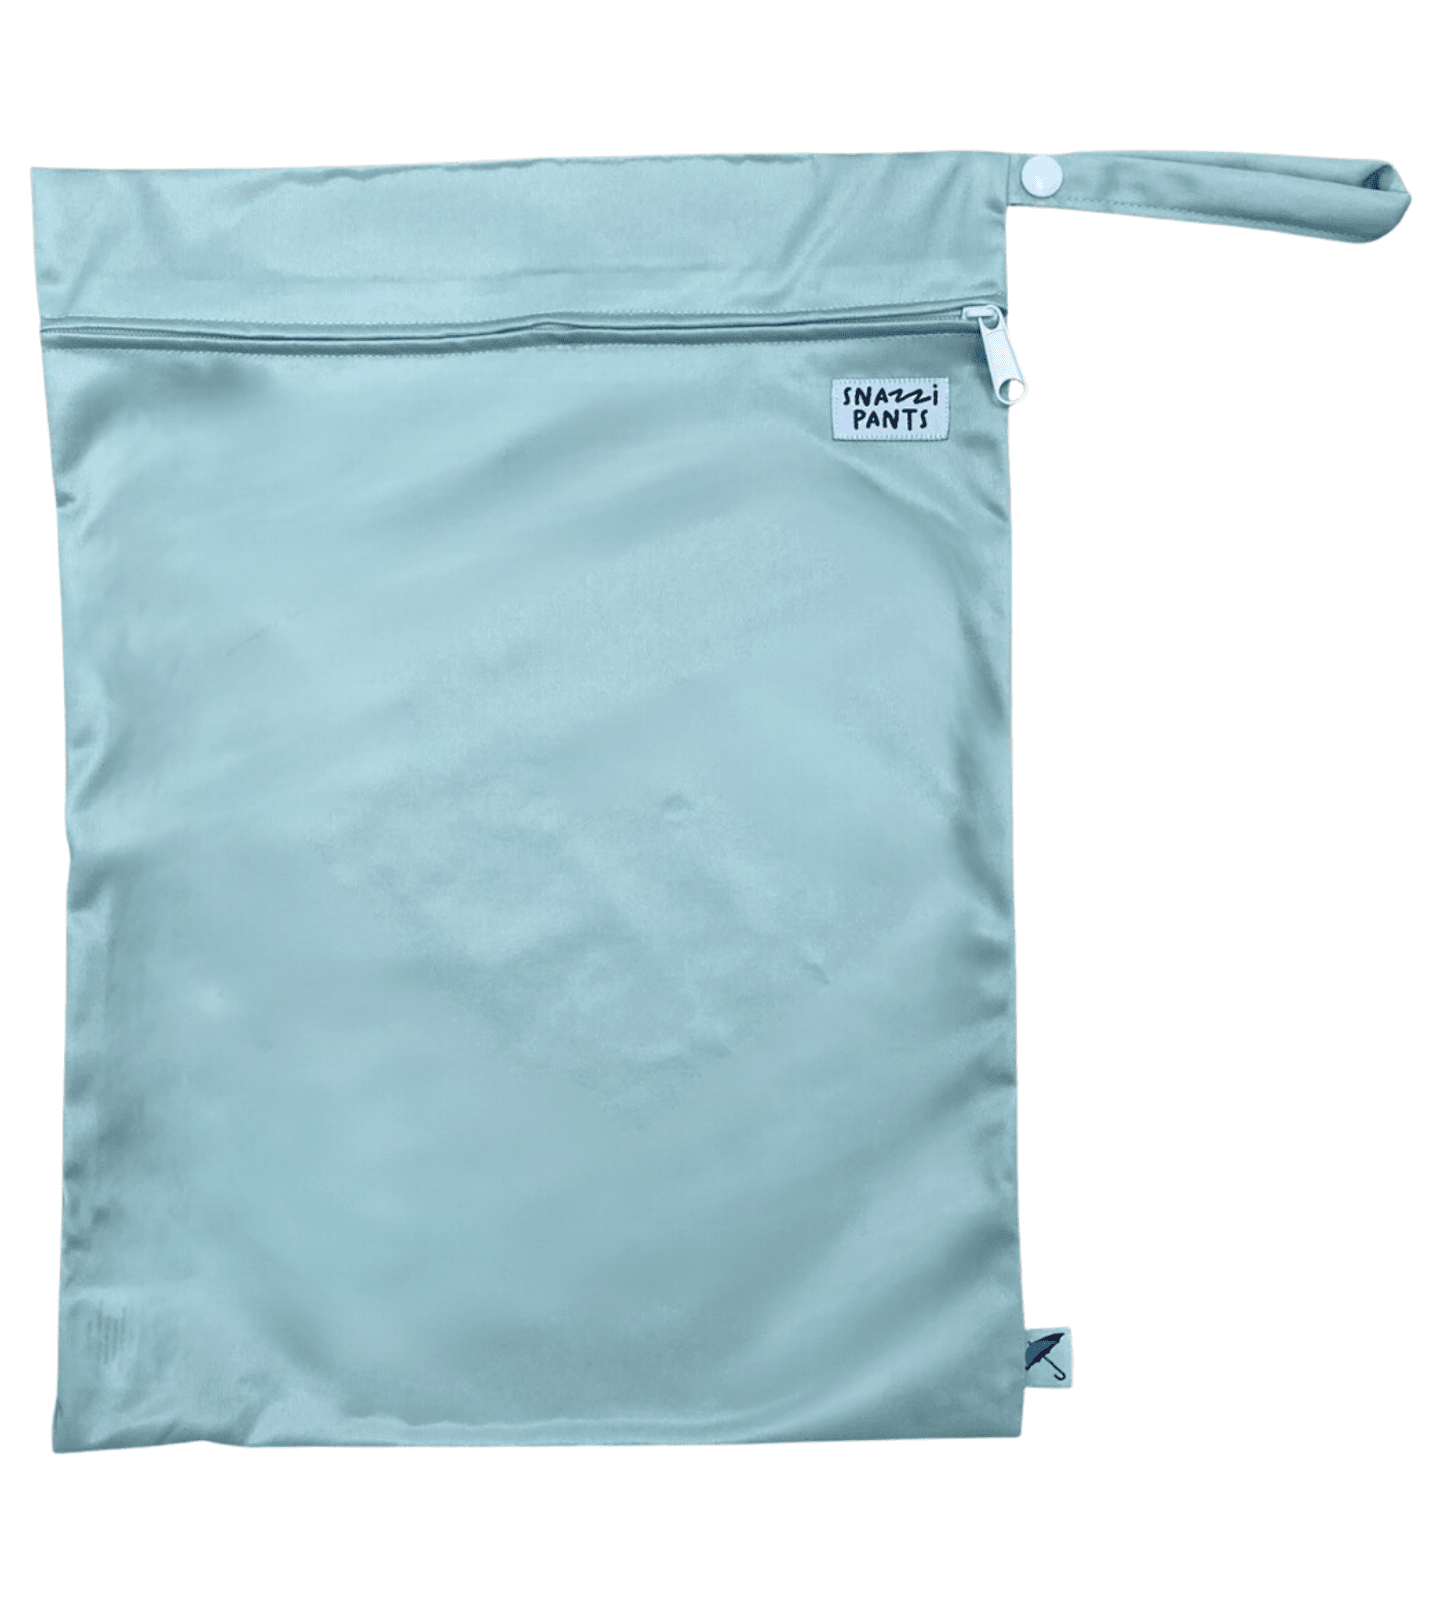 Wet Bag - Medium - Brolly Sheets AU